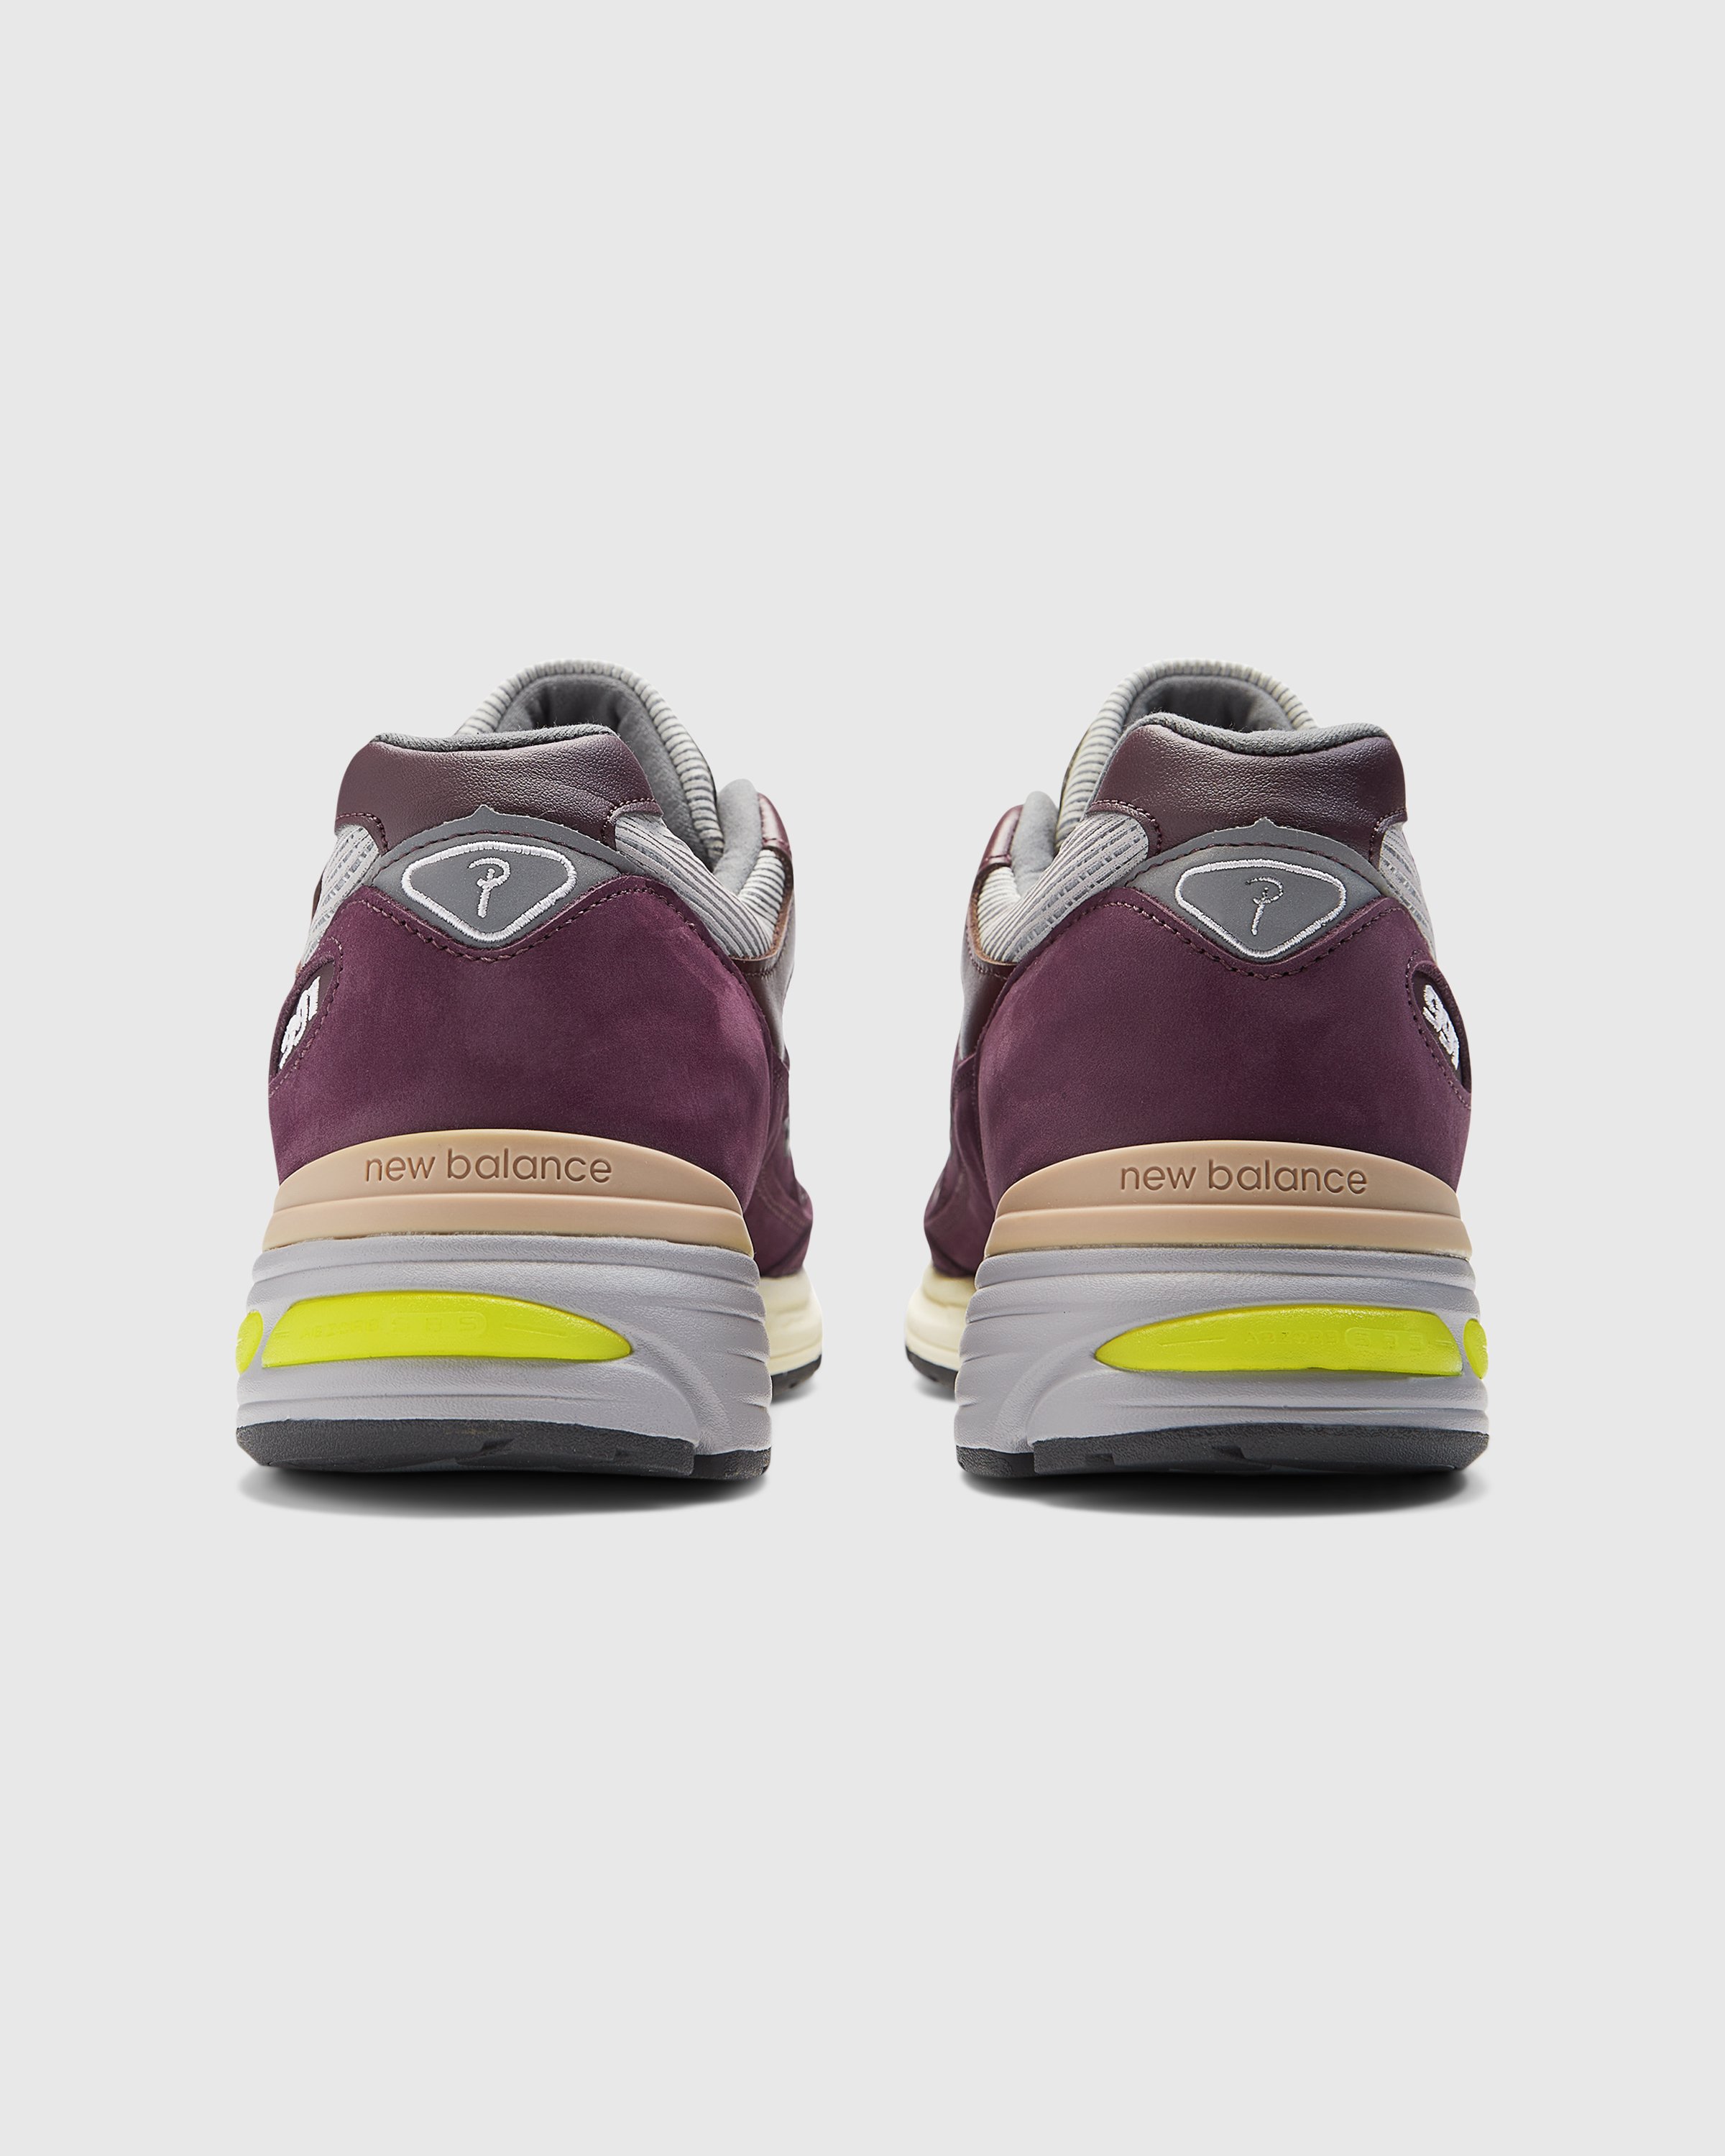 Patta x New Balance - 991v2 Pickled Beet - Footwear - Purple - Image 4